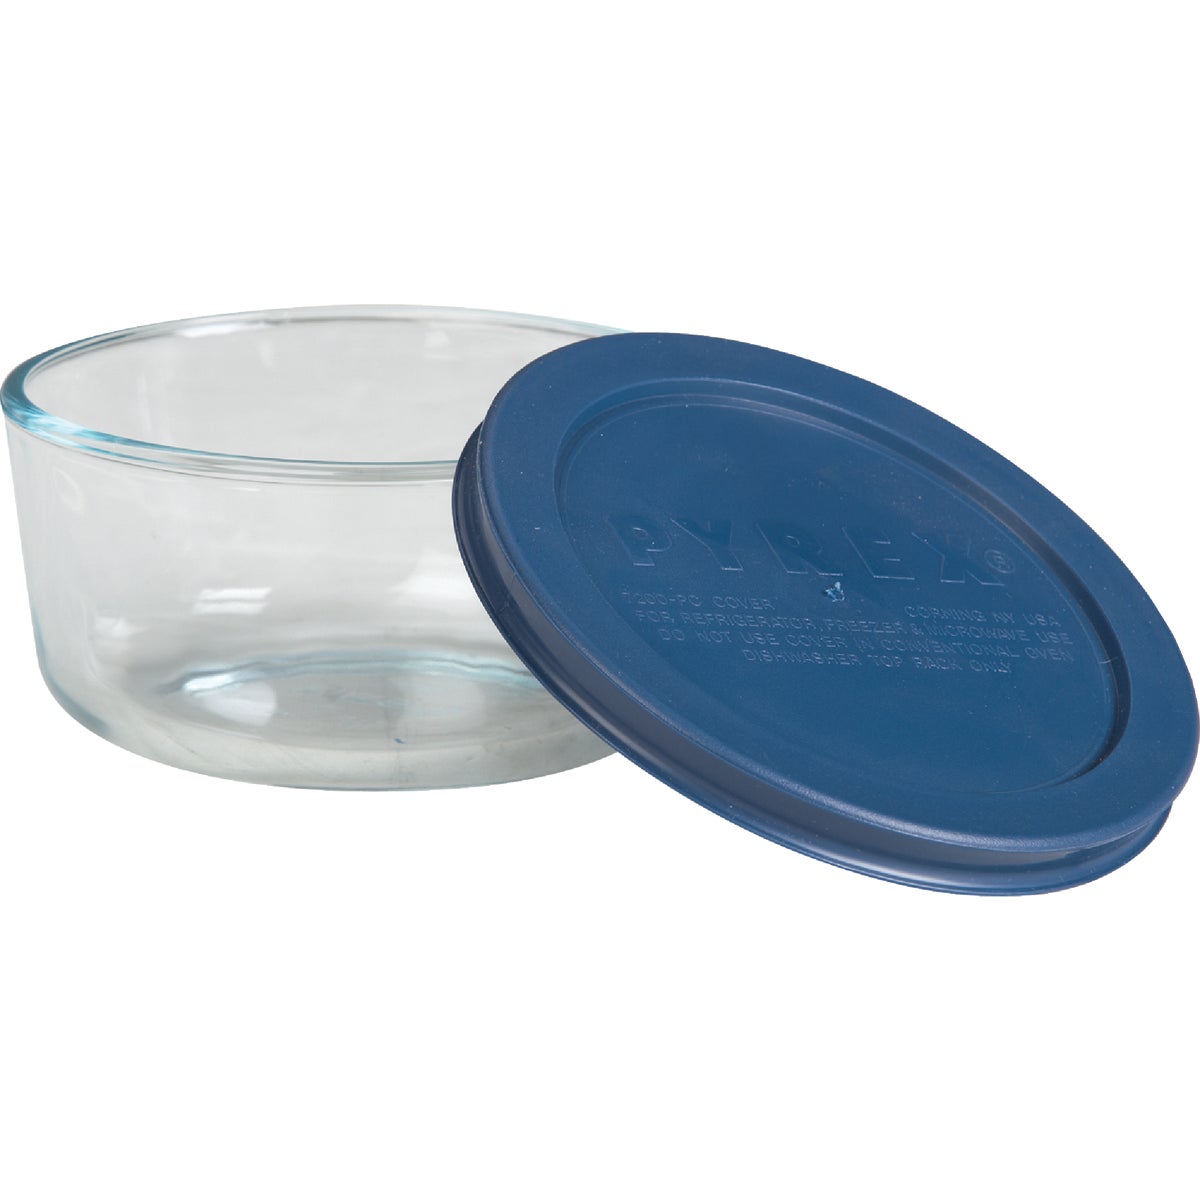 Pyrex Glass Storage, 2 Cup